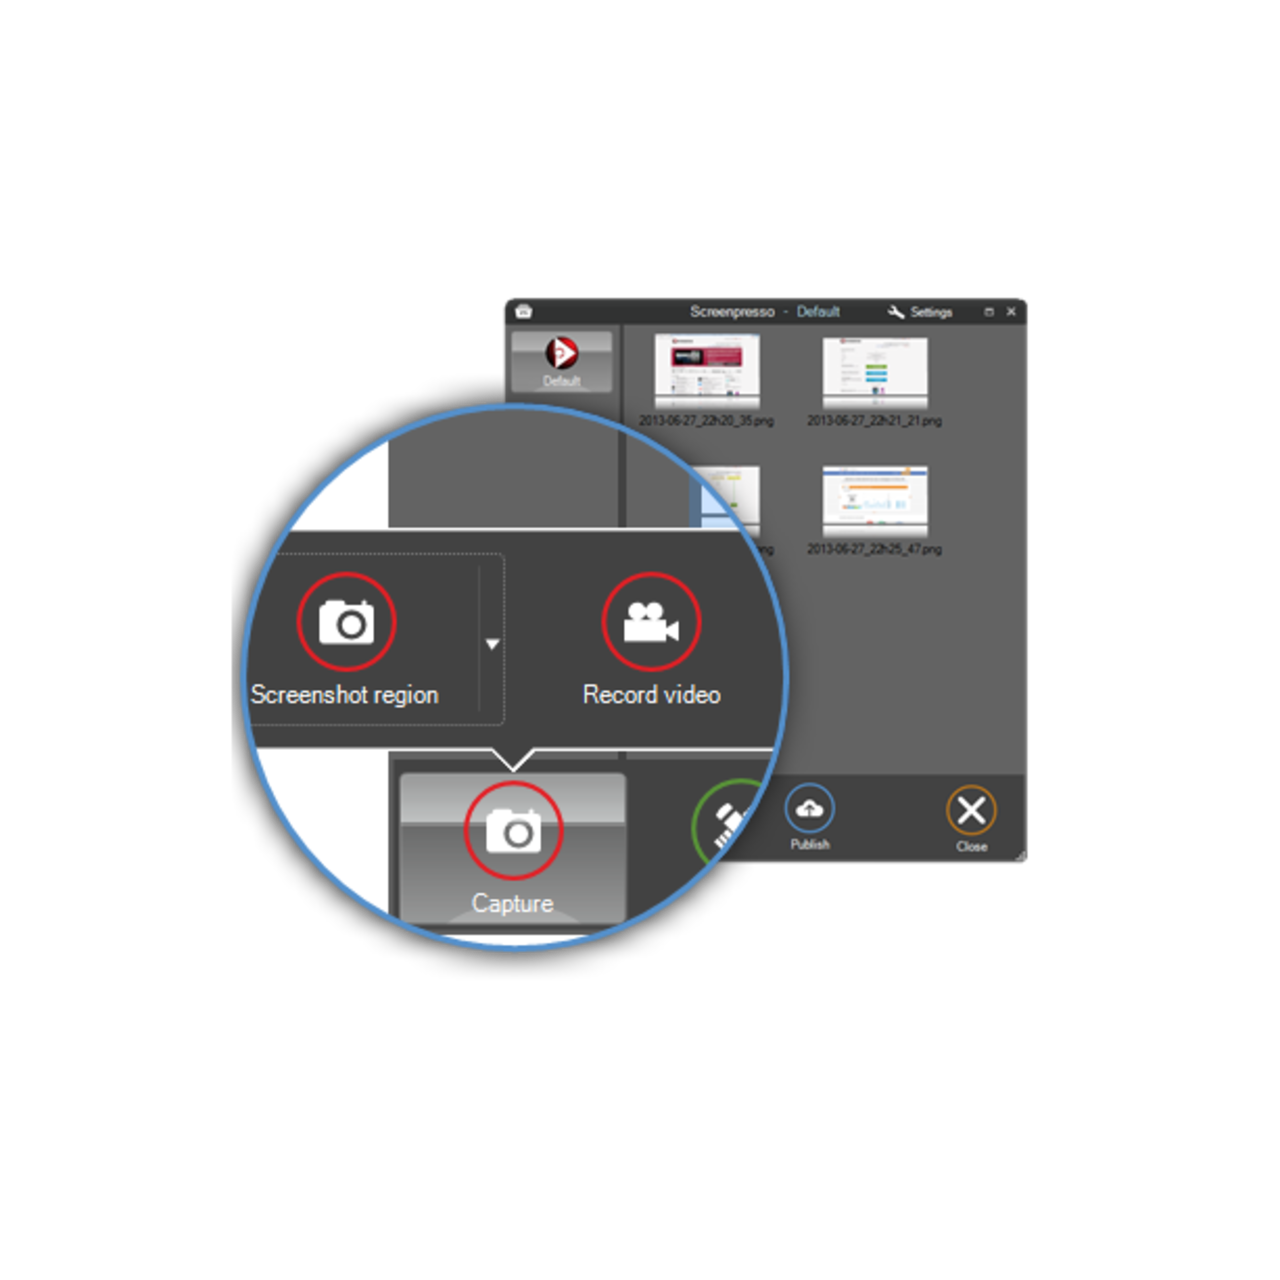 Screenpresso Pro 2.1.15 for ipod instal